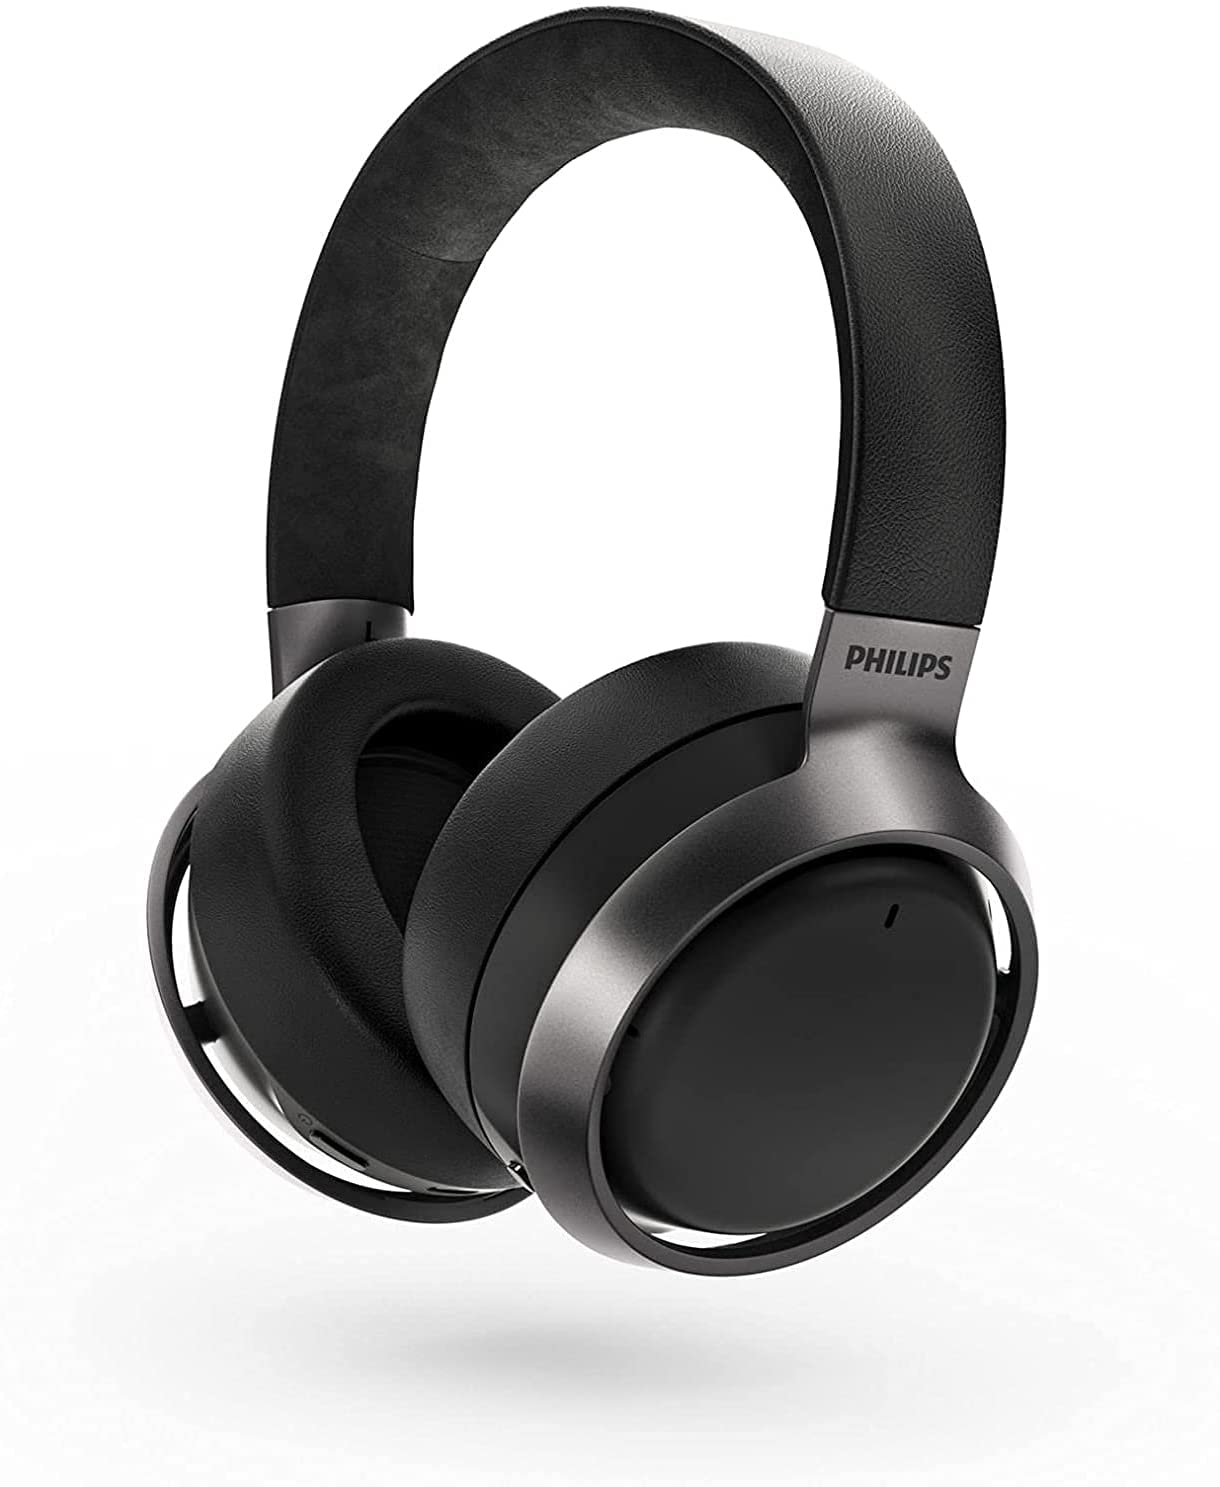 Philips Fidelio L3 ANC headphones - $219  ($130 off) at Amazon